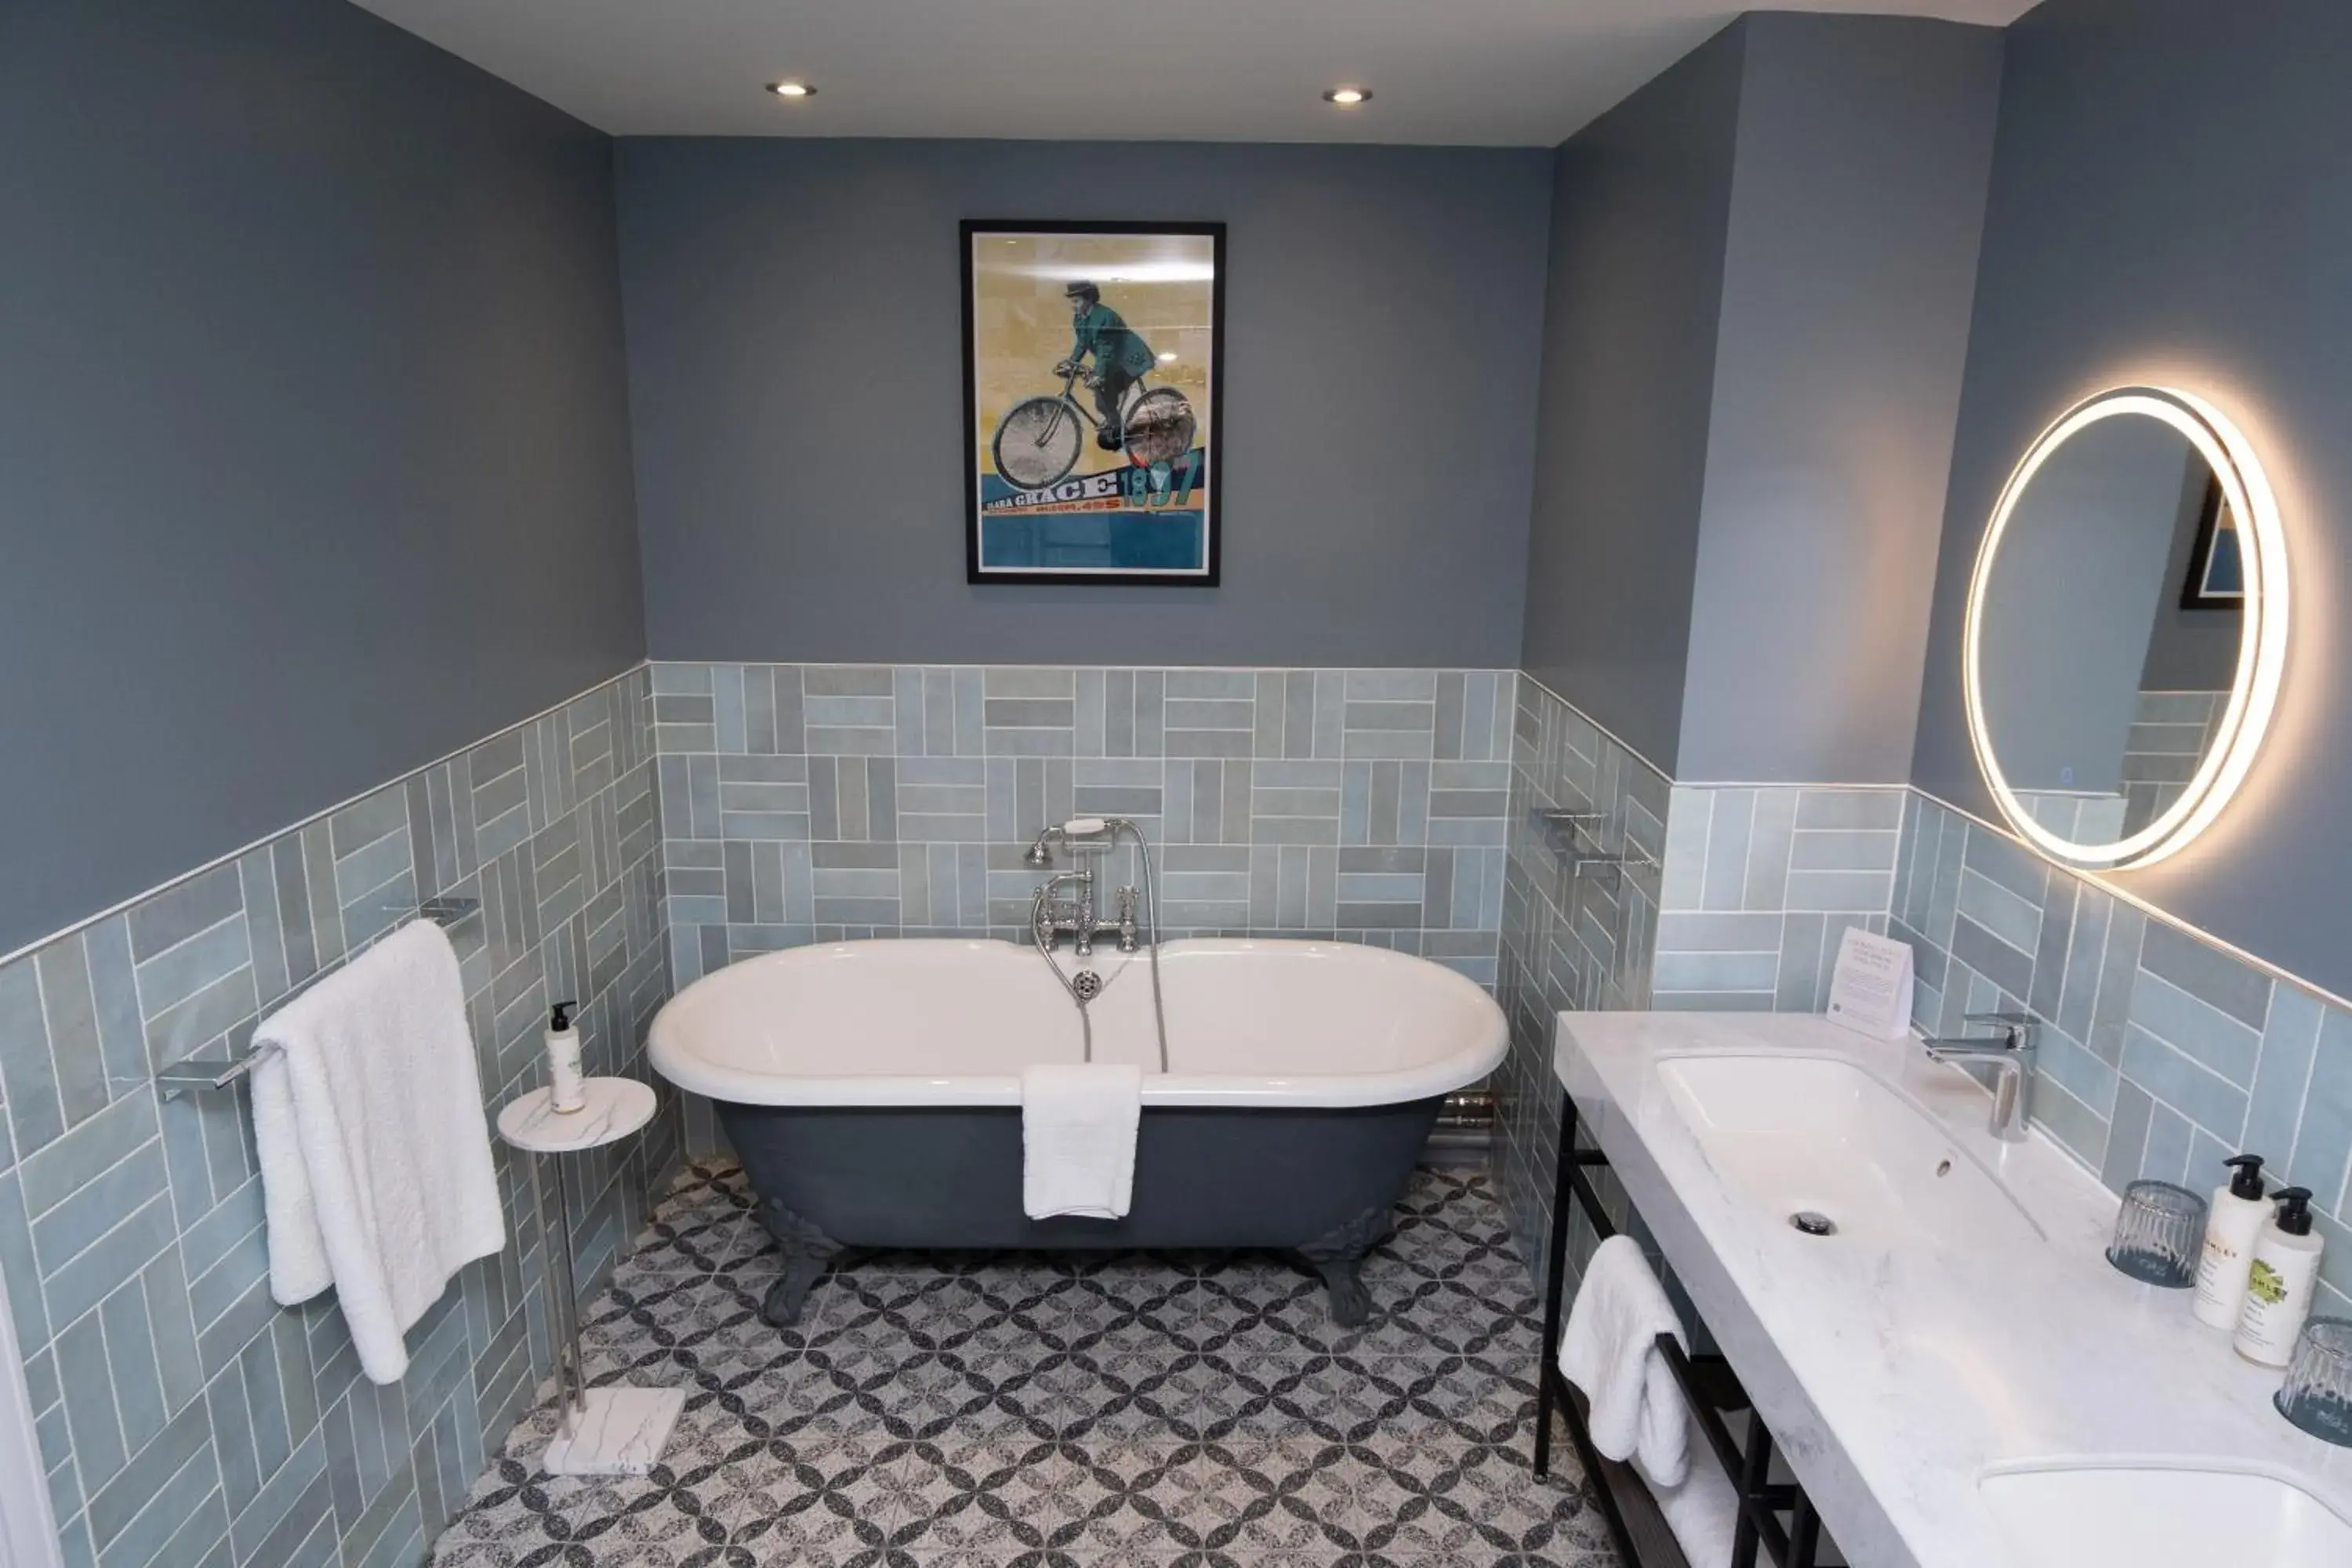 Bathroom in Hotel Indigo Coventry